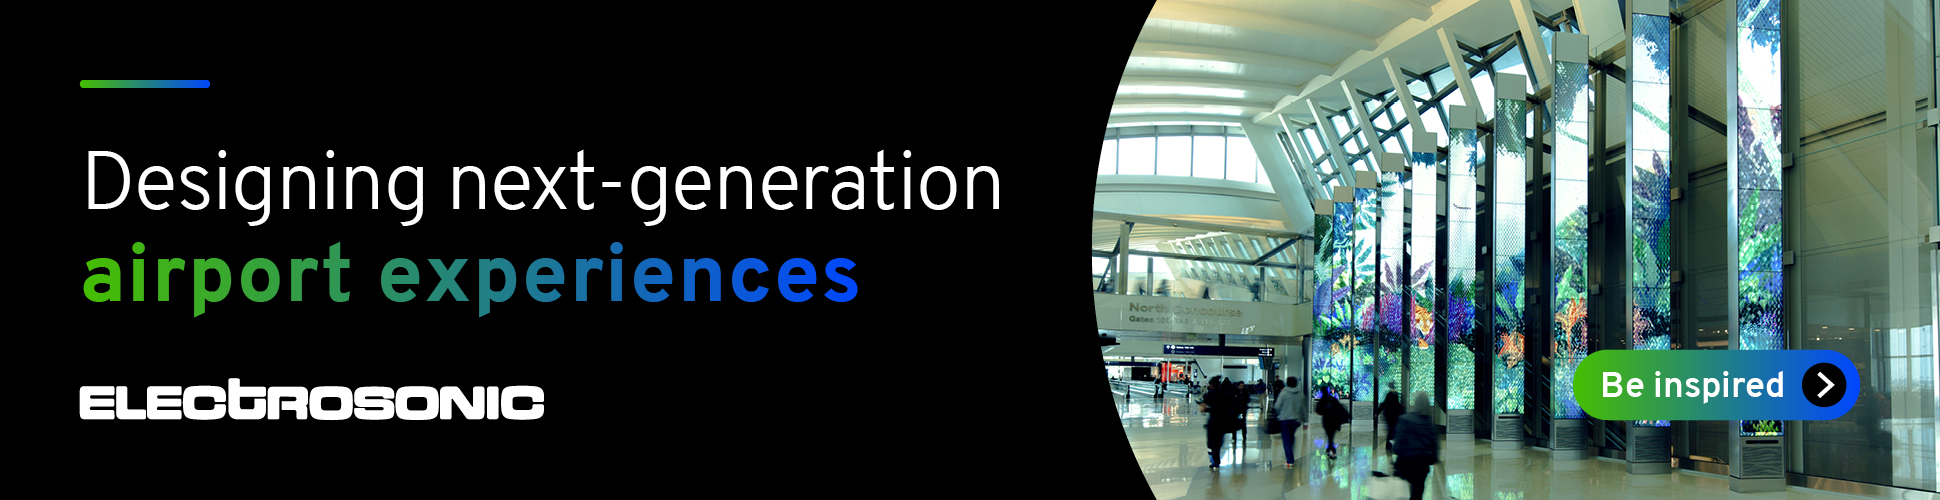 Designing next generation airport experiences